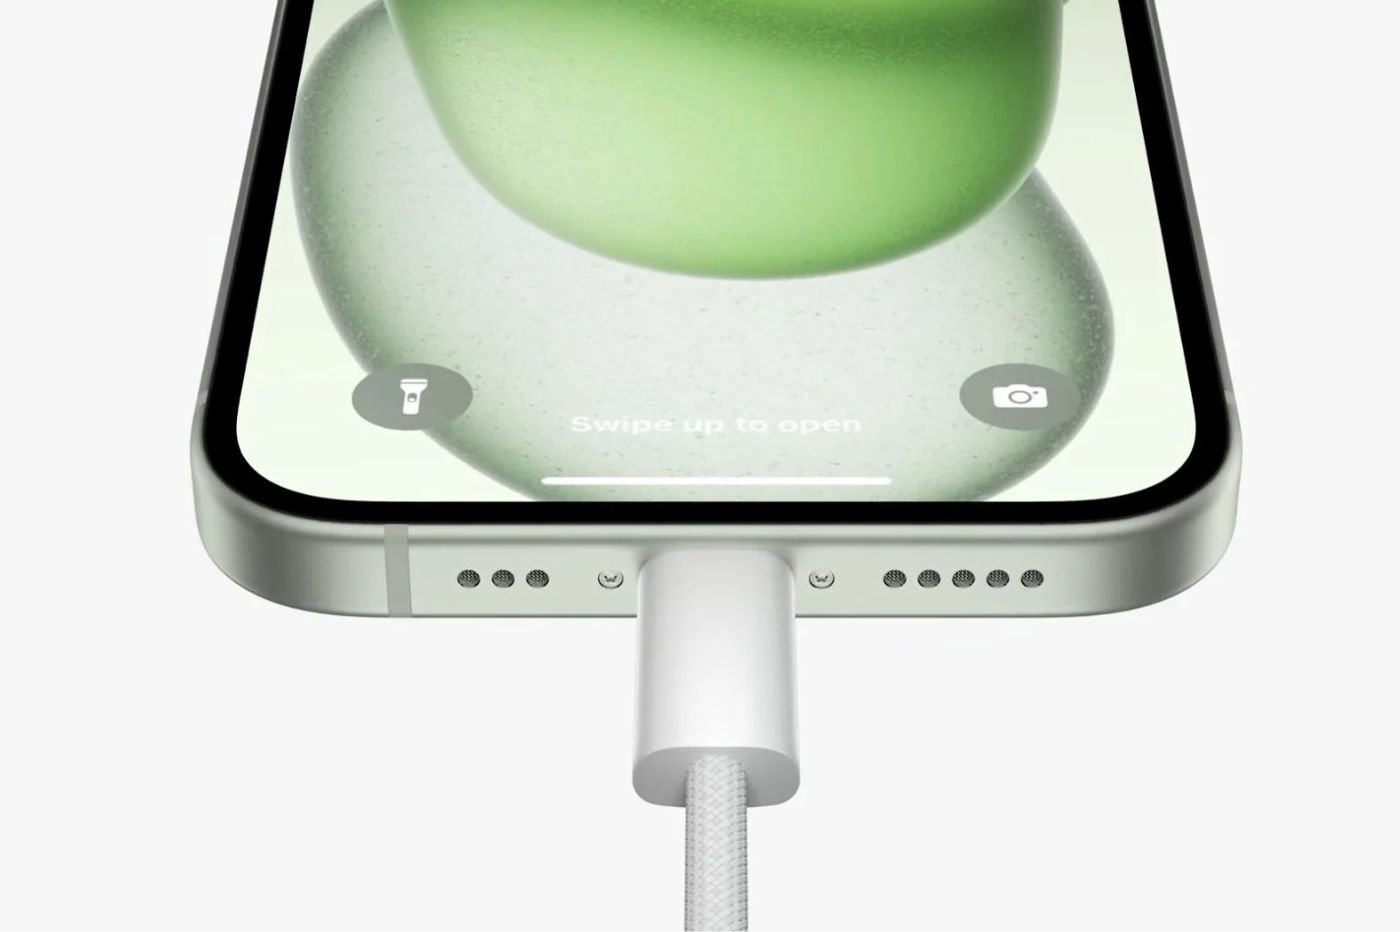 apple-iphone-15